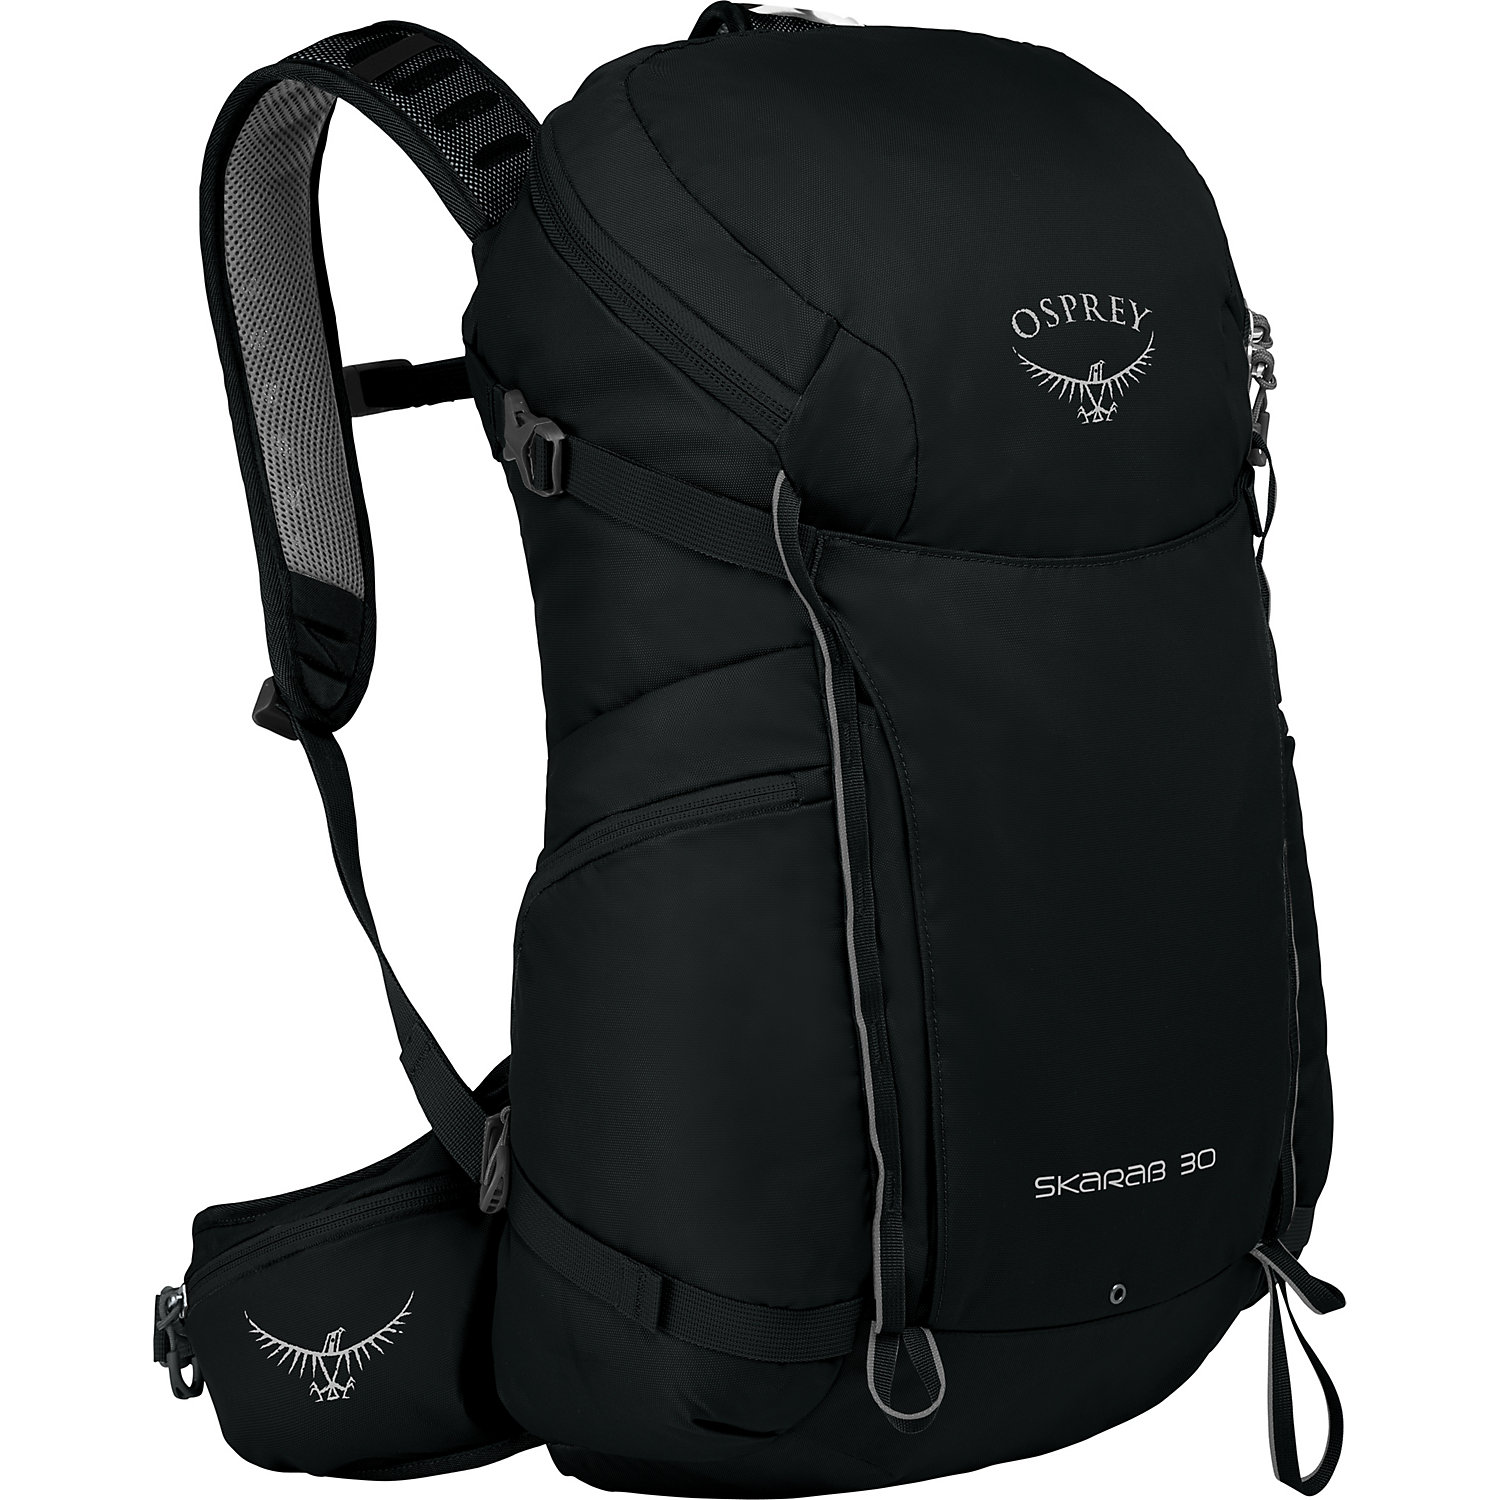 Osprey Skarab 30 Backpack